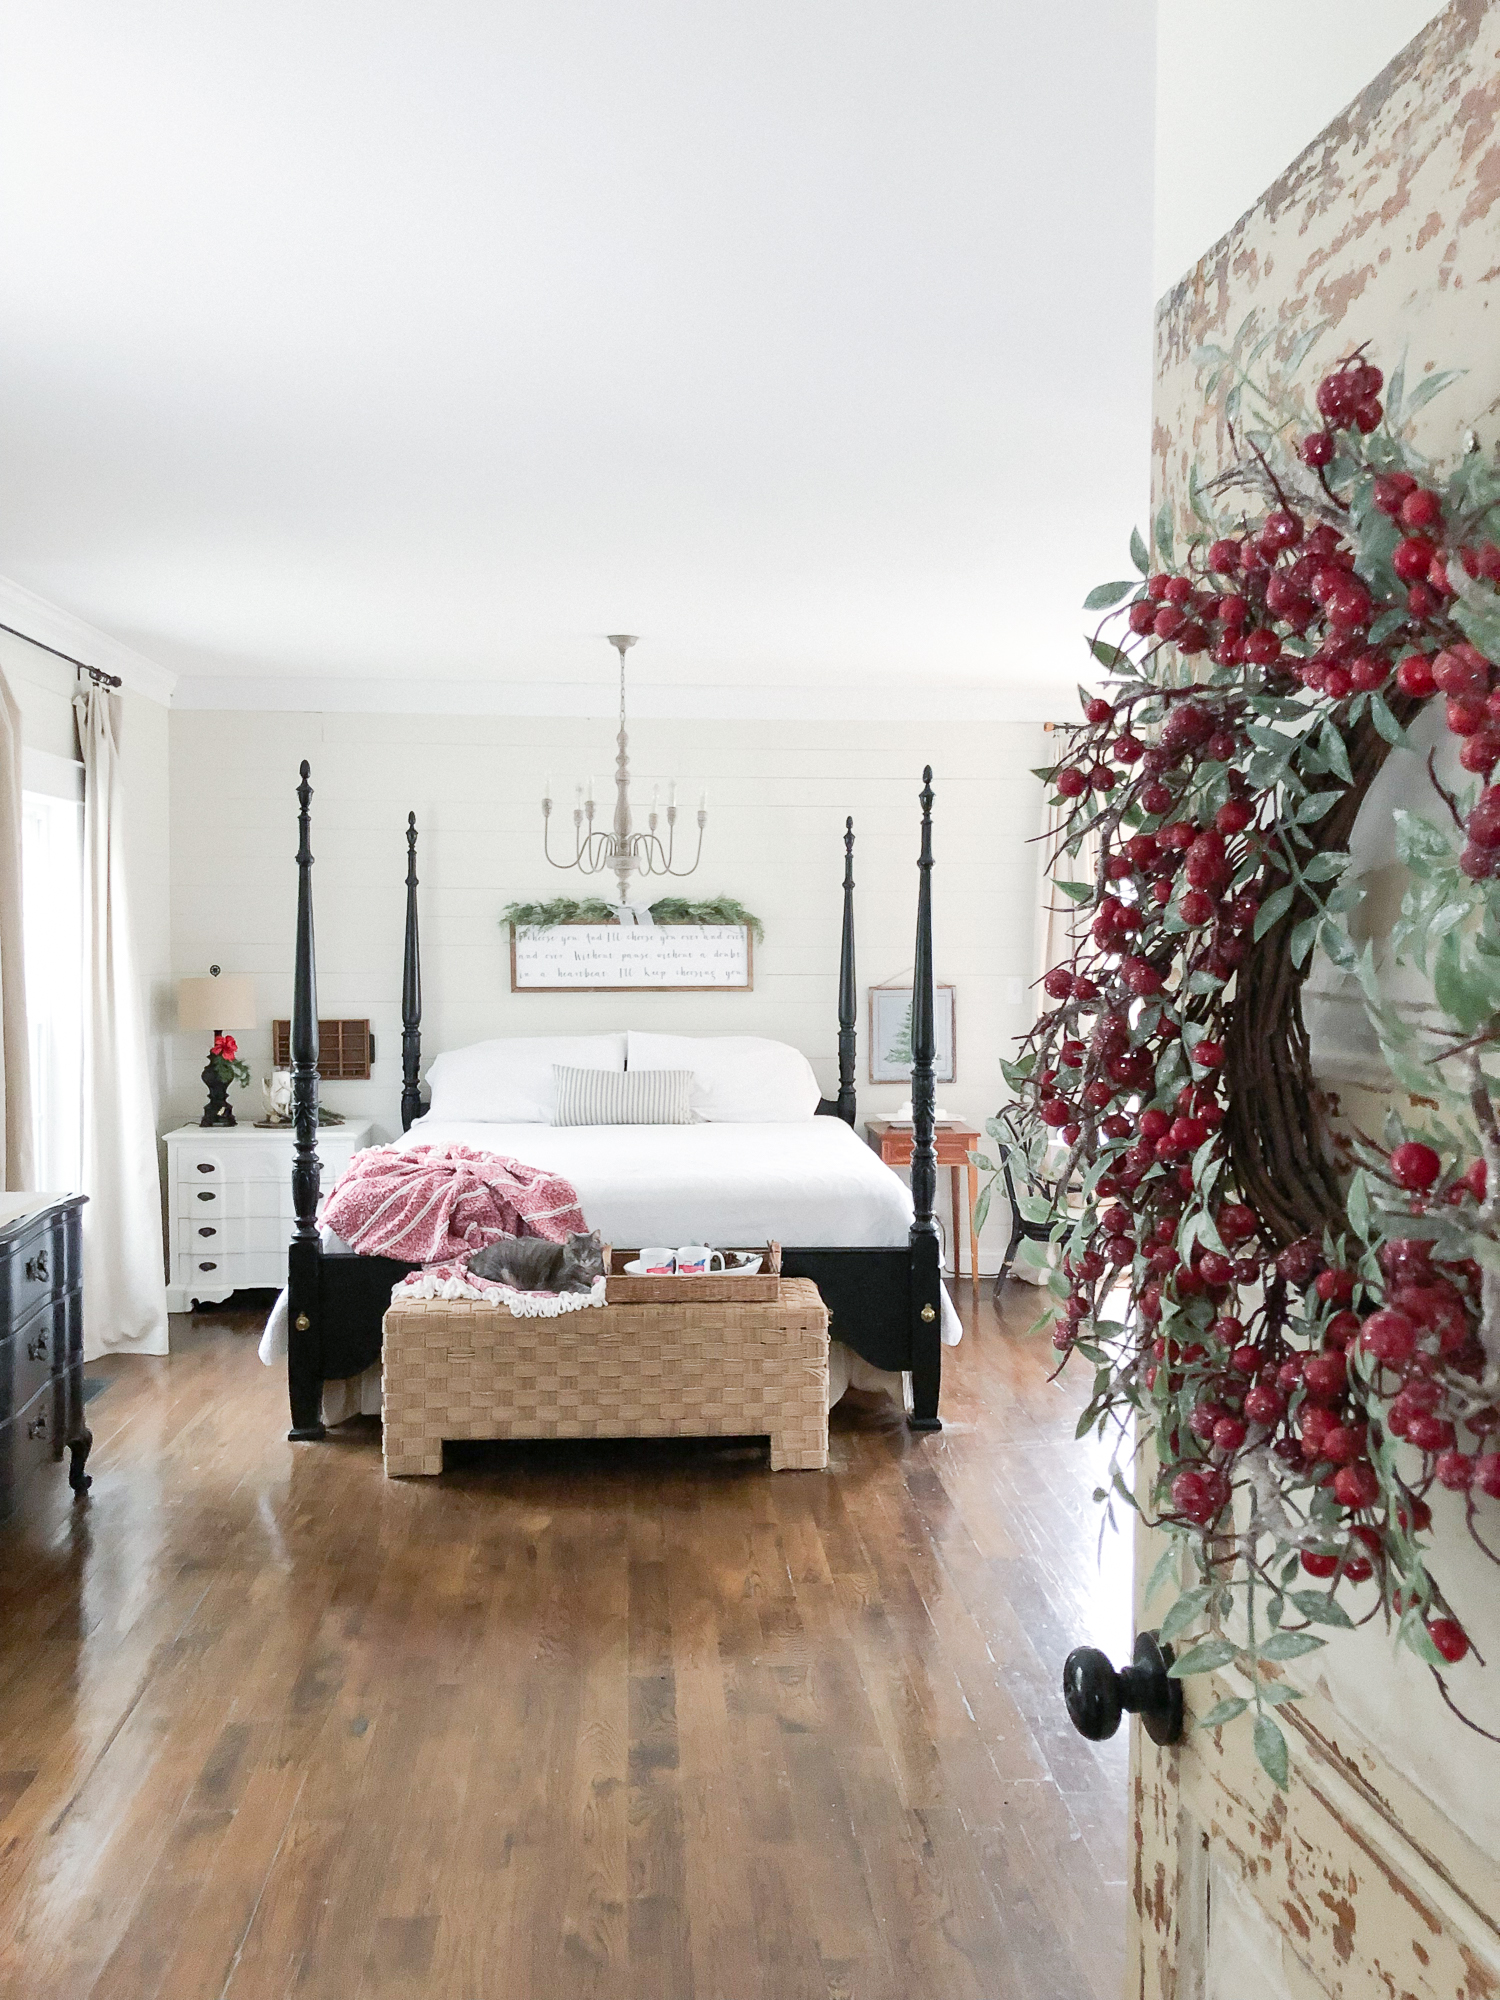 Our Christmas Master Bedroom – Seasons of Home Tour